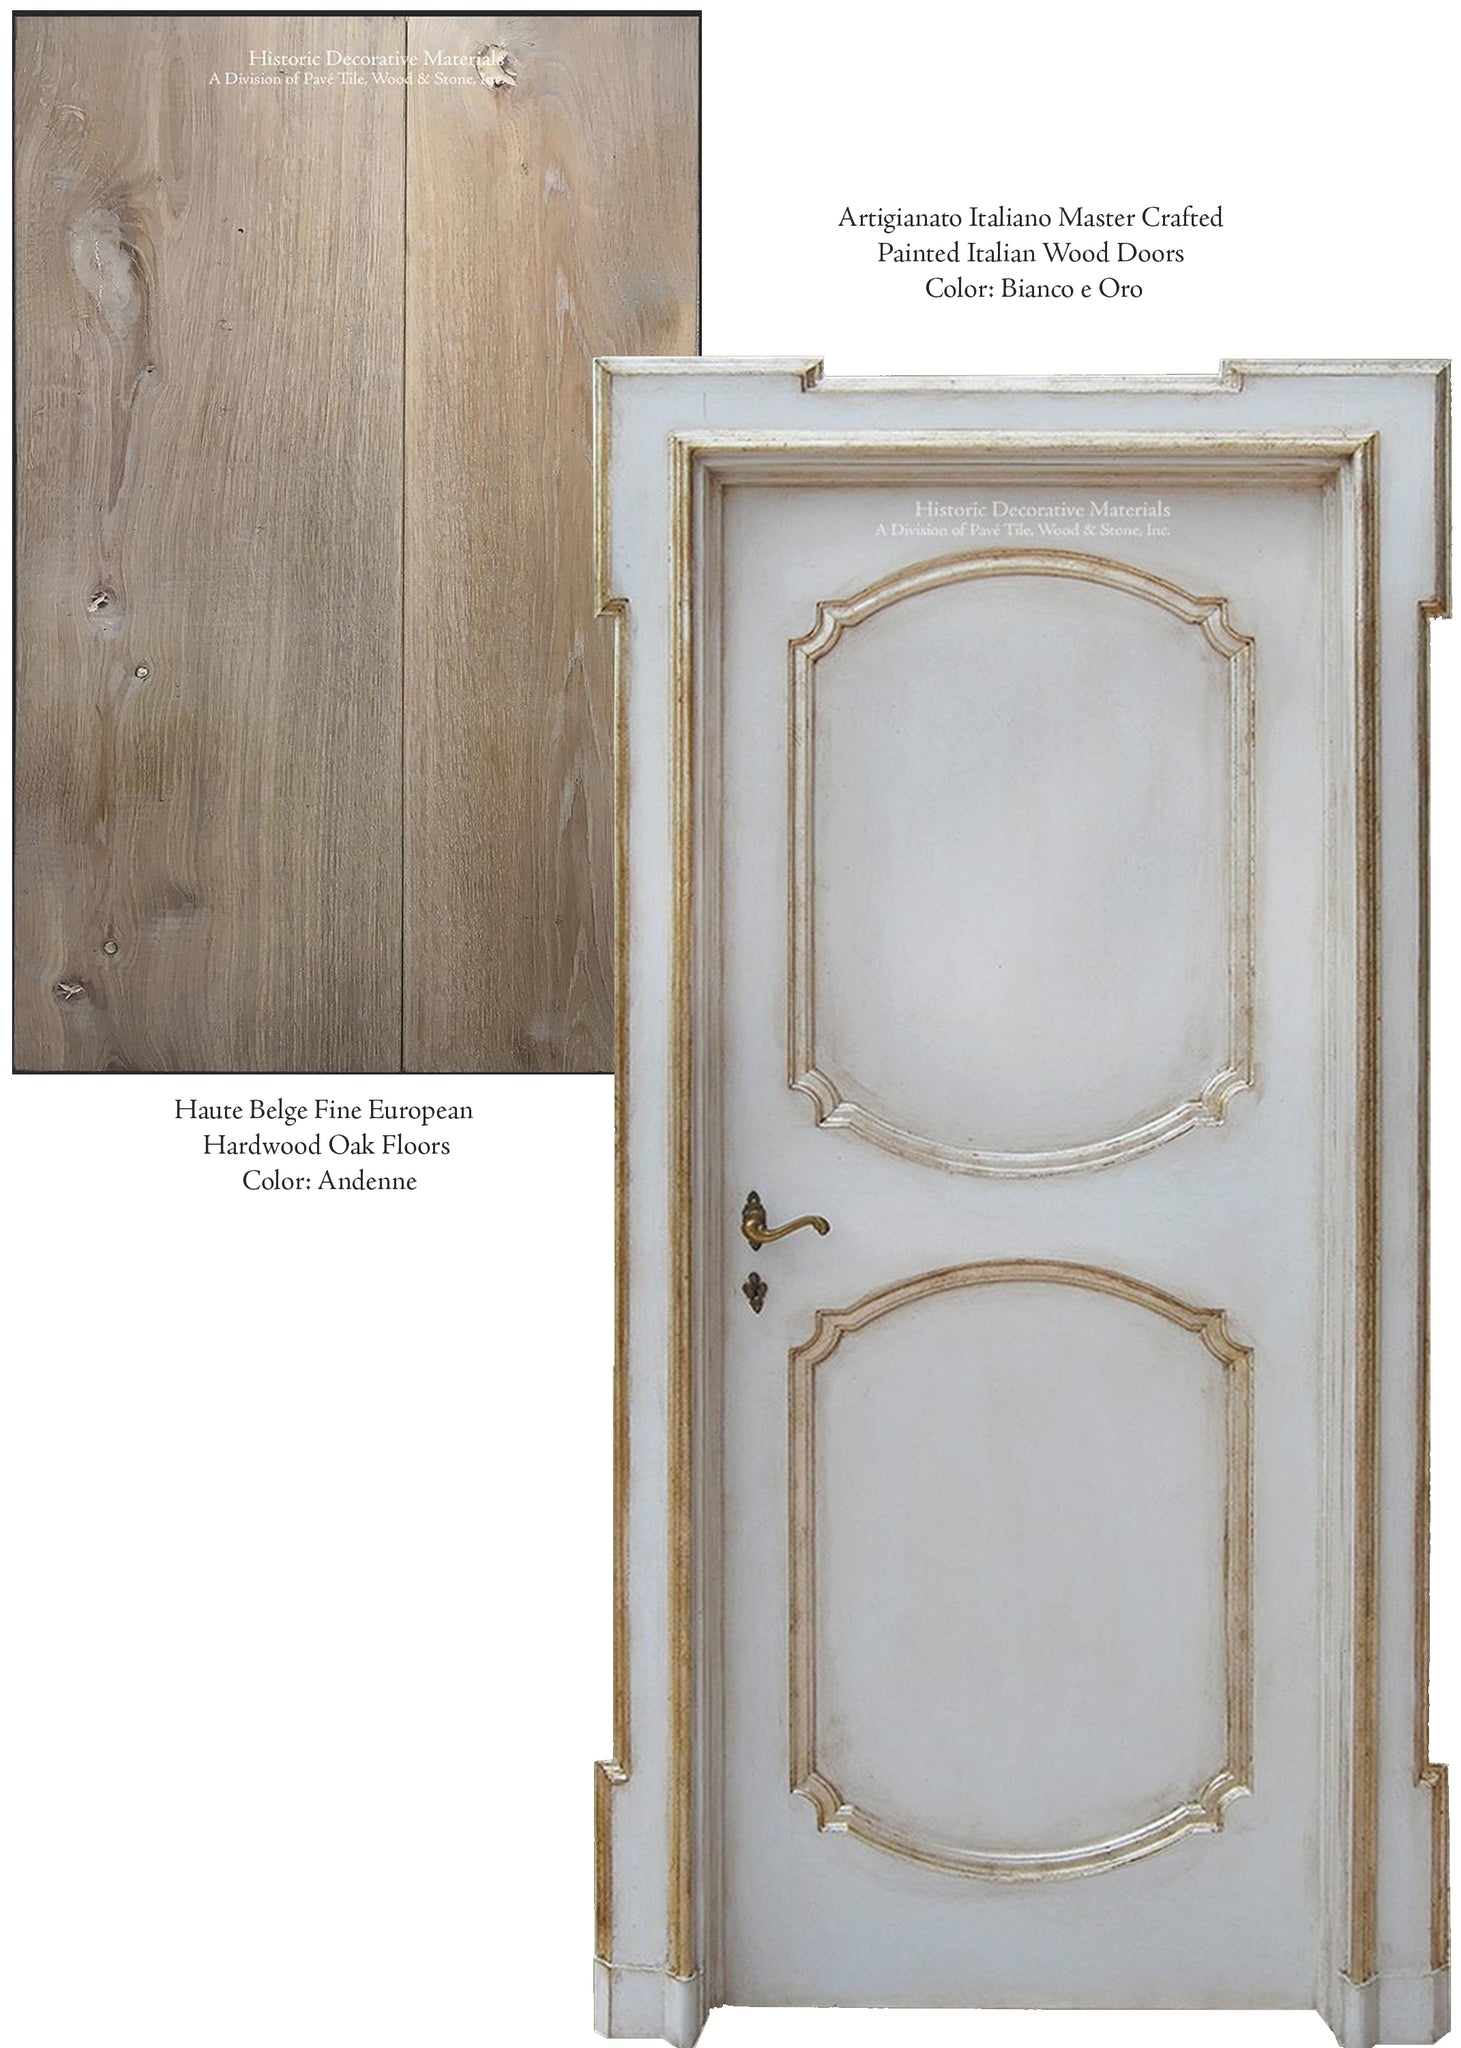 European Oak Hardwood Floors and Hand Painted Italian Wood Doors